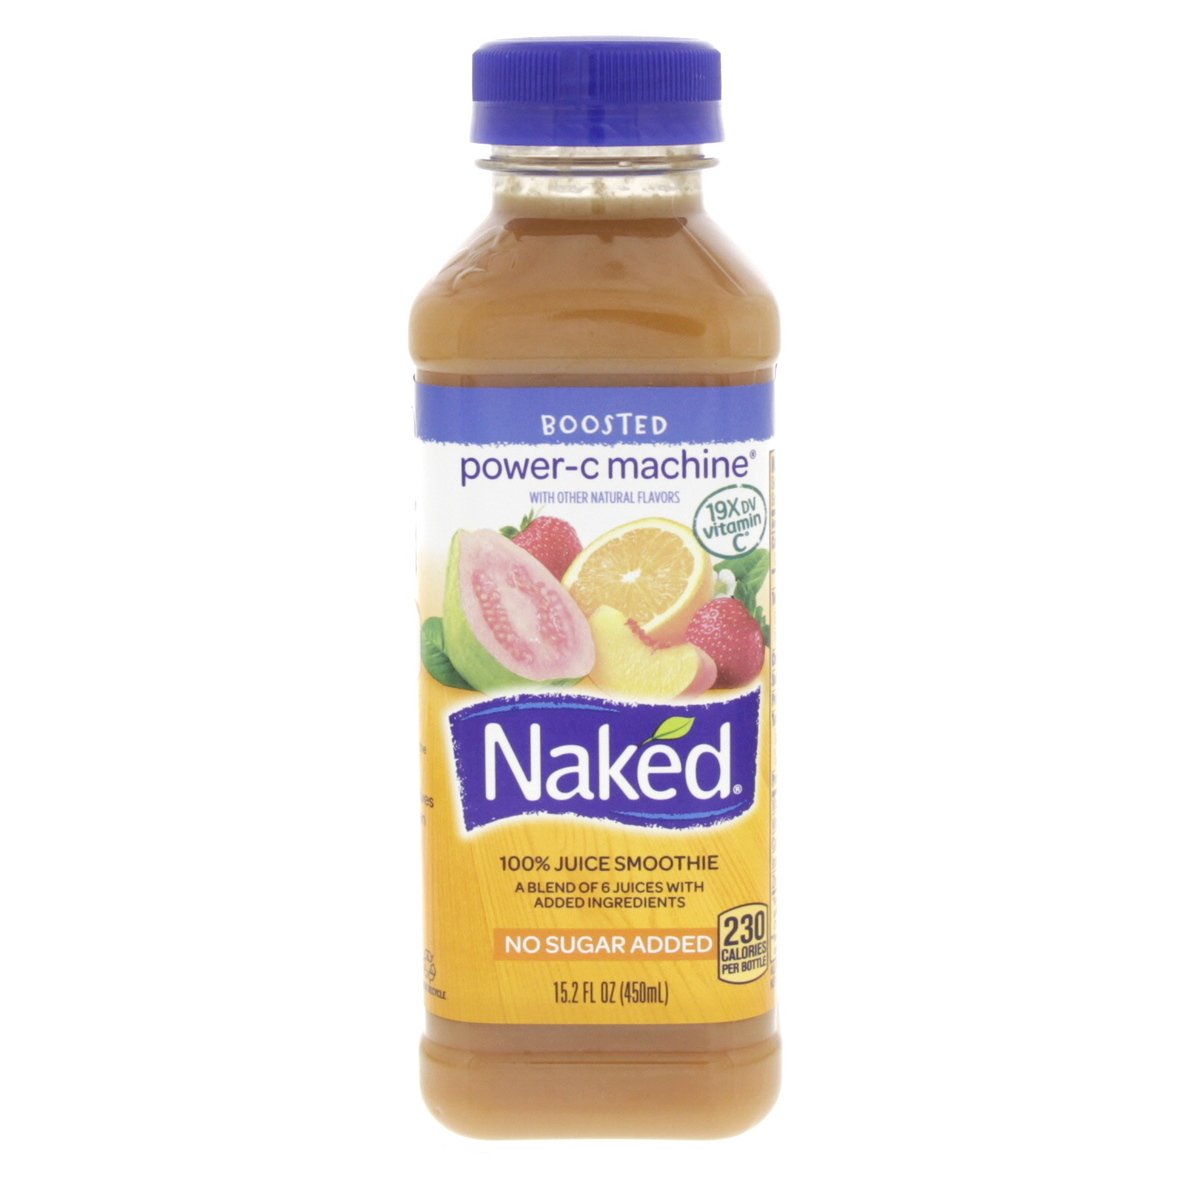 Naked Power-C Machine 100% Juice Smoothie 450ml